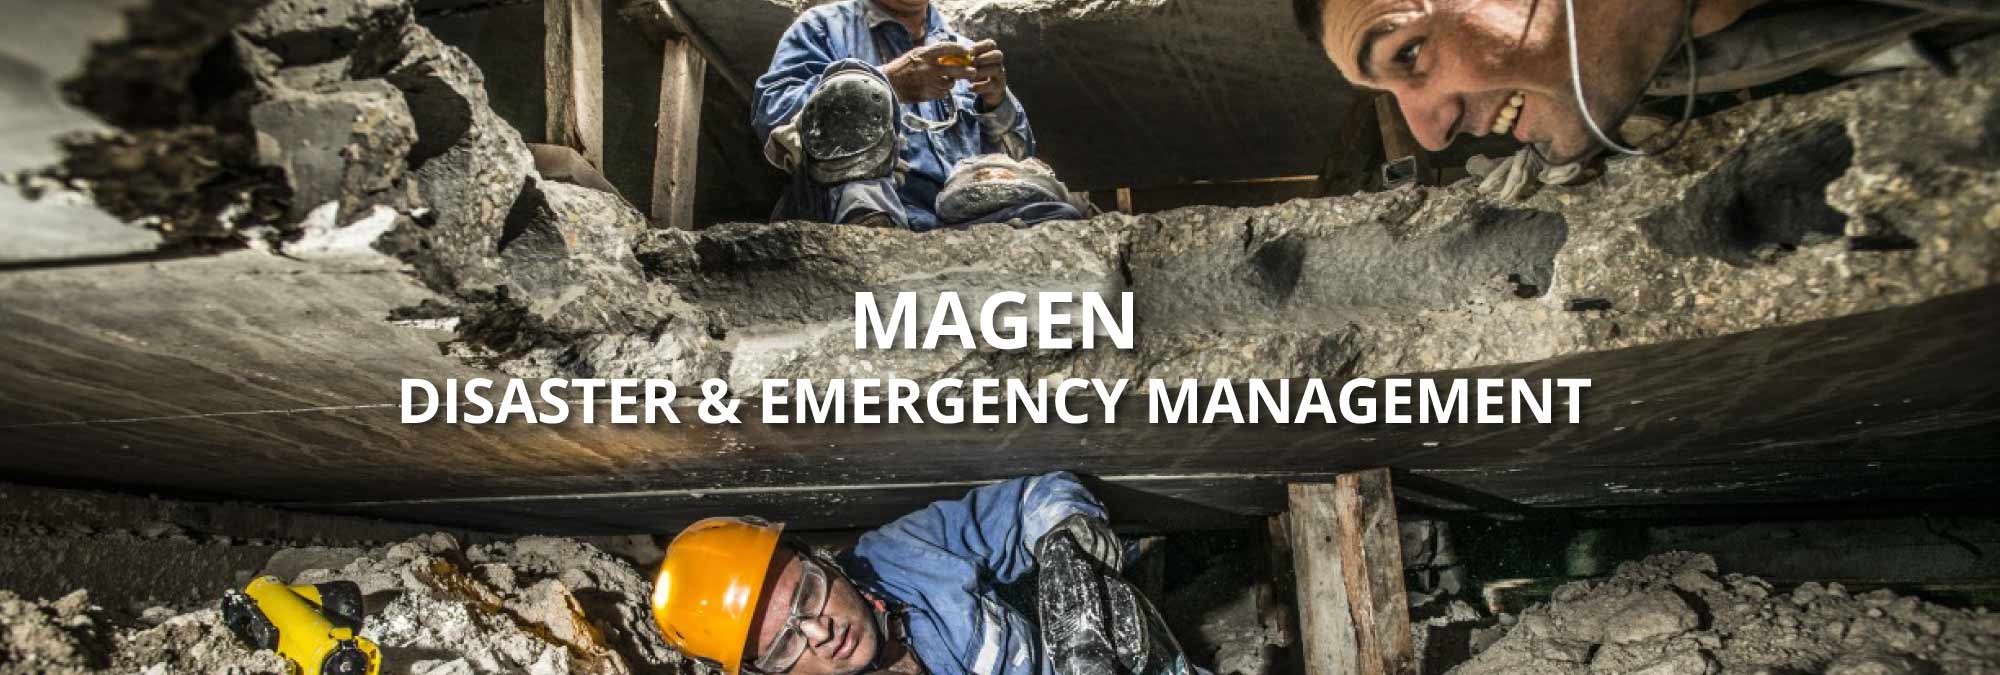 MAGEN – DISASTER & EMERGENCY MANAGEMENT